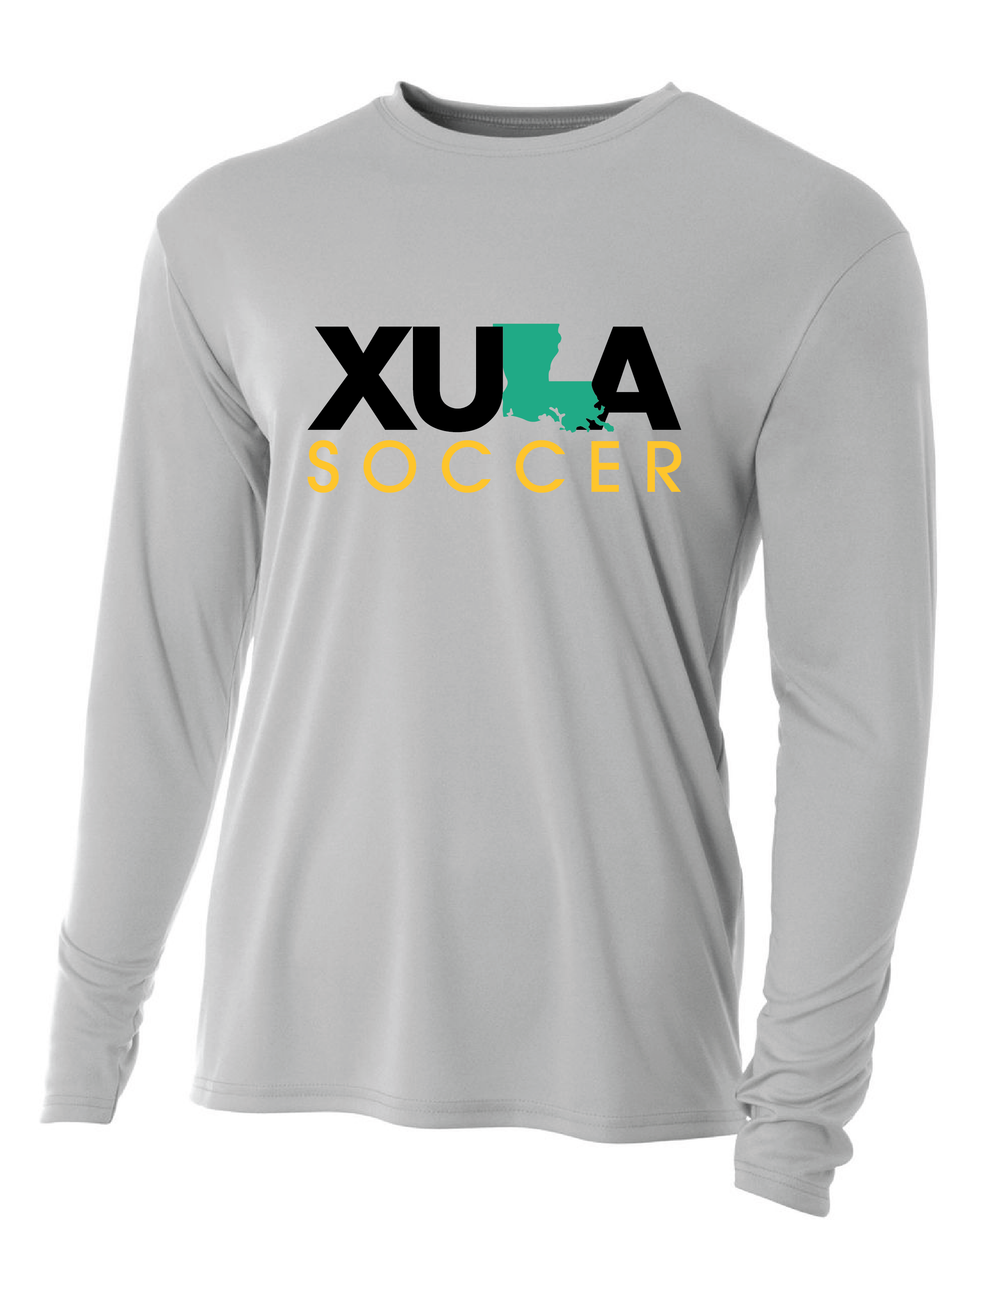 XULA Soccer Long-Sleeve Performance Shirt Xavier University Sport Grey Mens Small - Third Coast Soccer